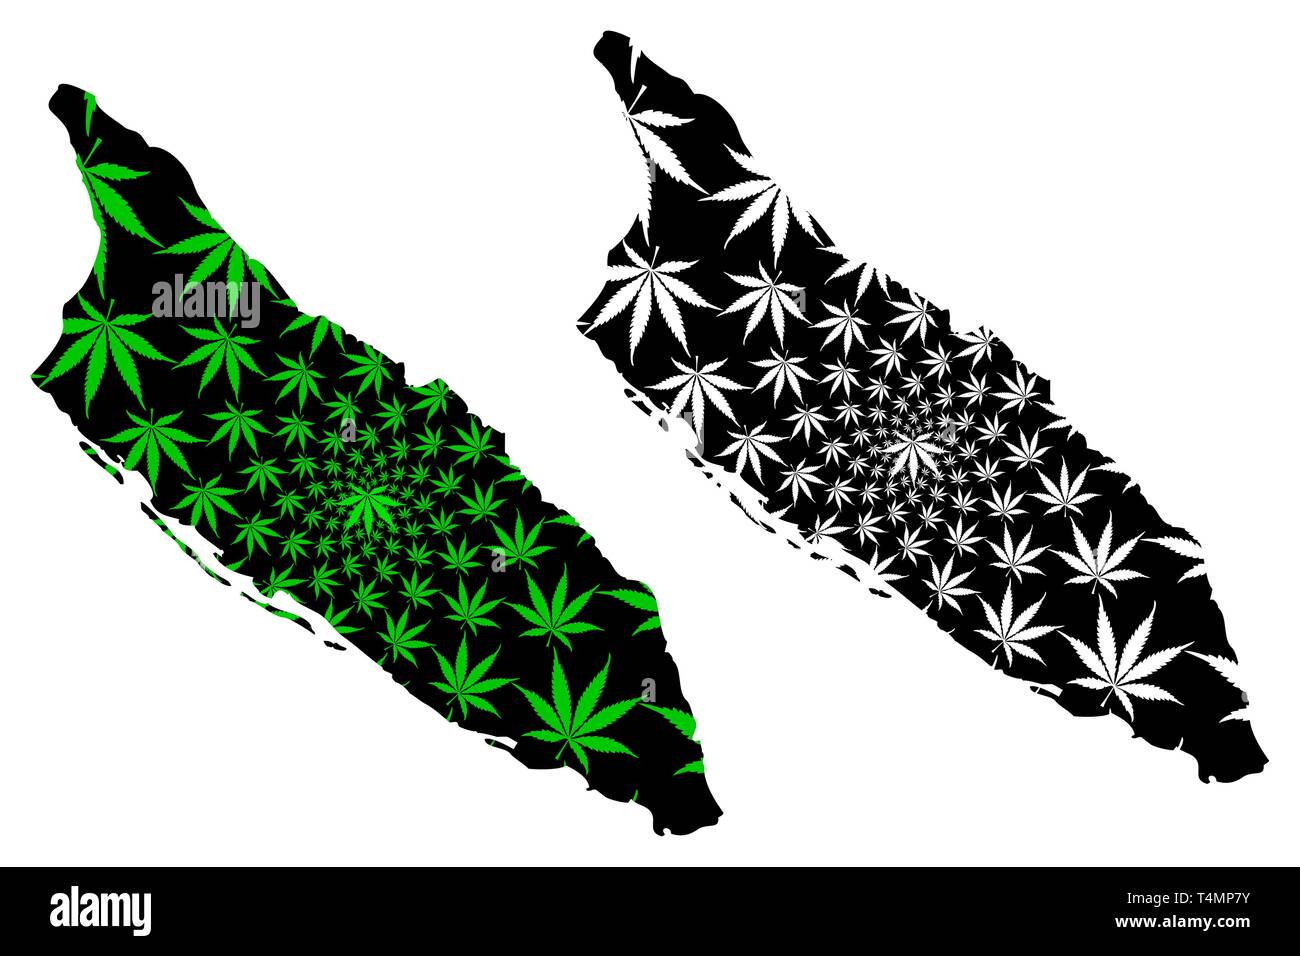 Aruba - carte feuille de cannabis est vert et noir, l'île de Aruba carte de marijuana, THC) feuillage, Illustration de Vecteur